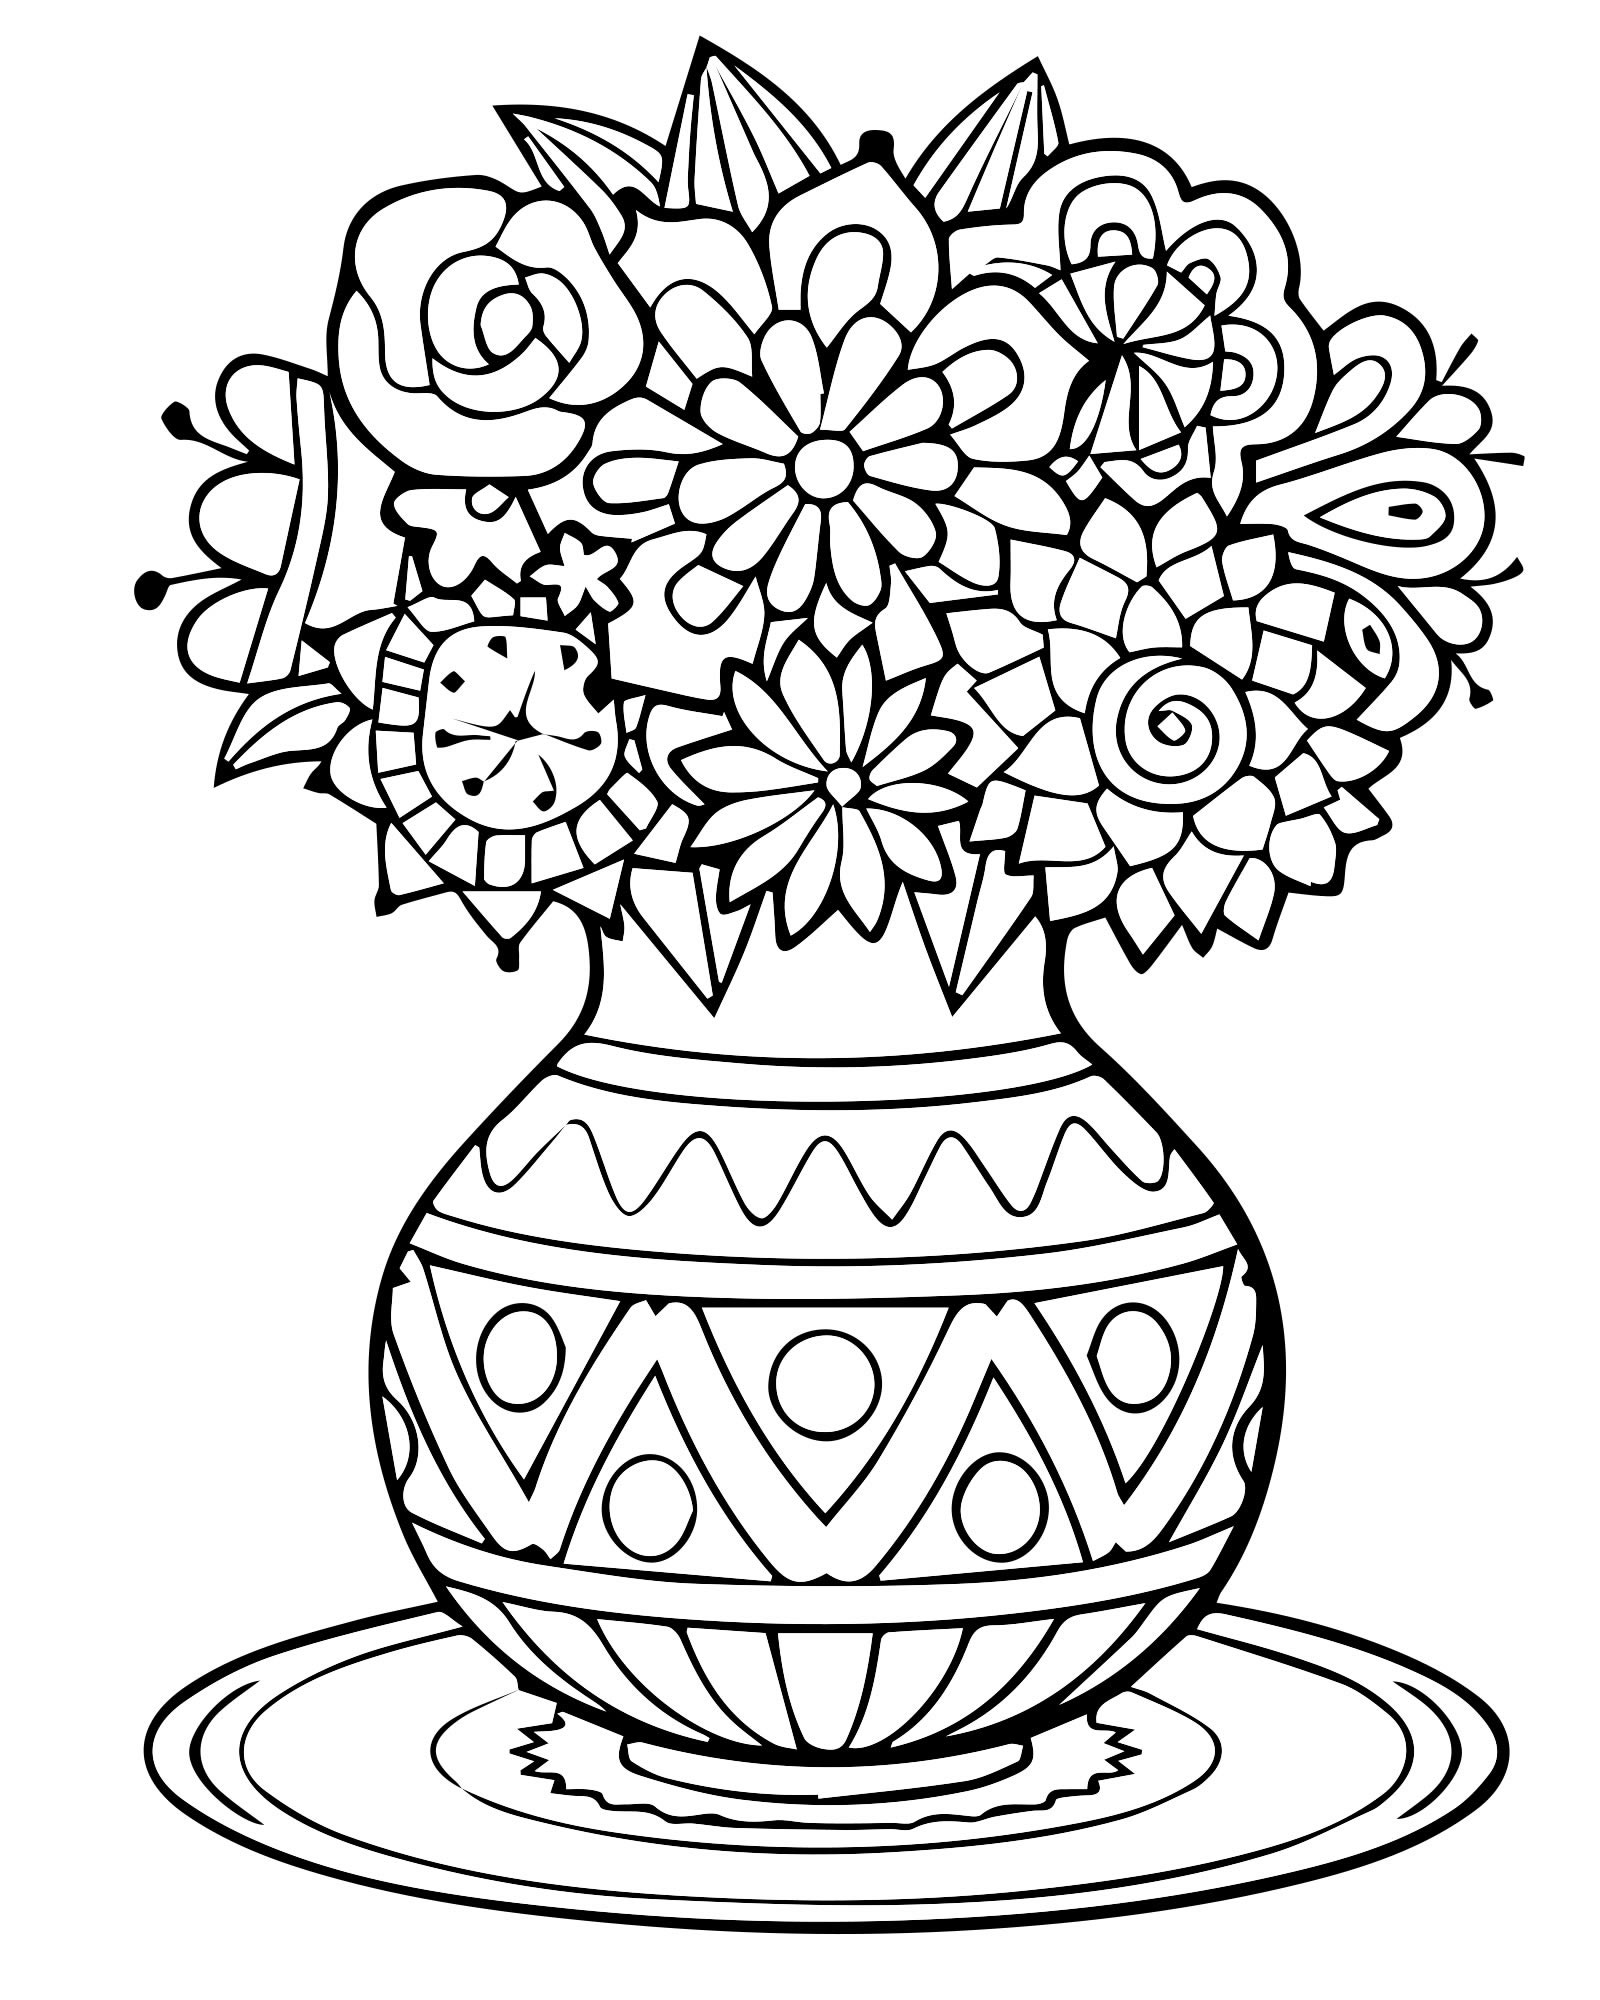 Раскраска ваза с цветами для детей - 70 фото